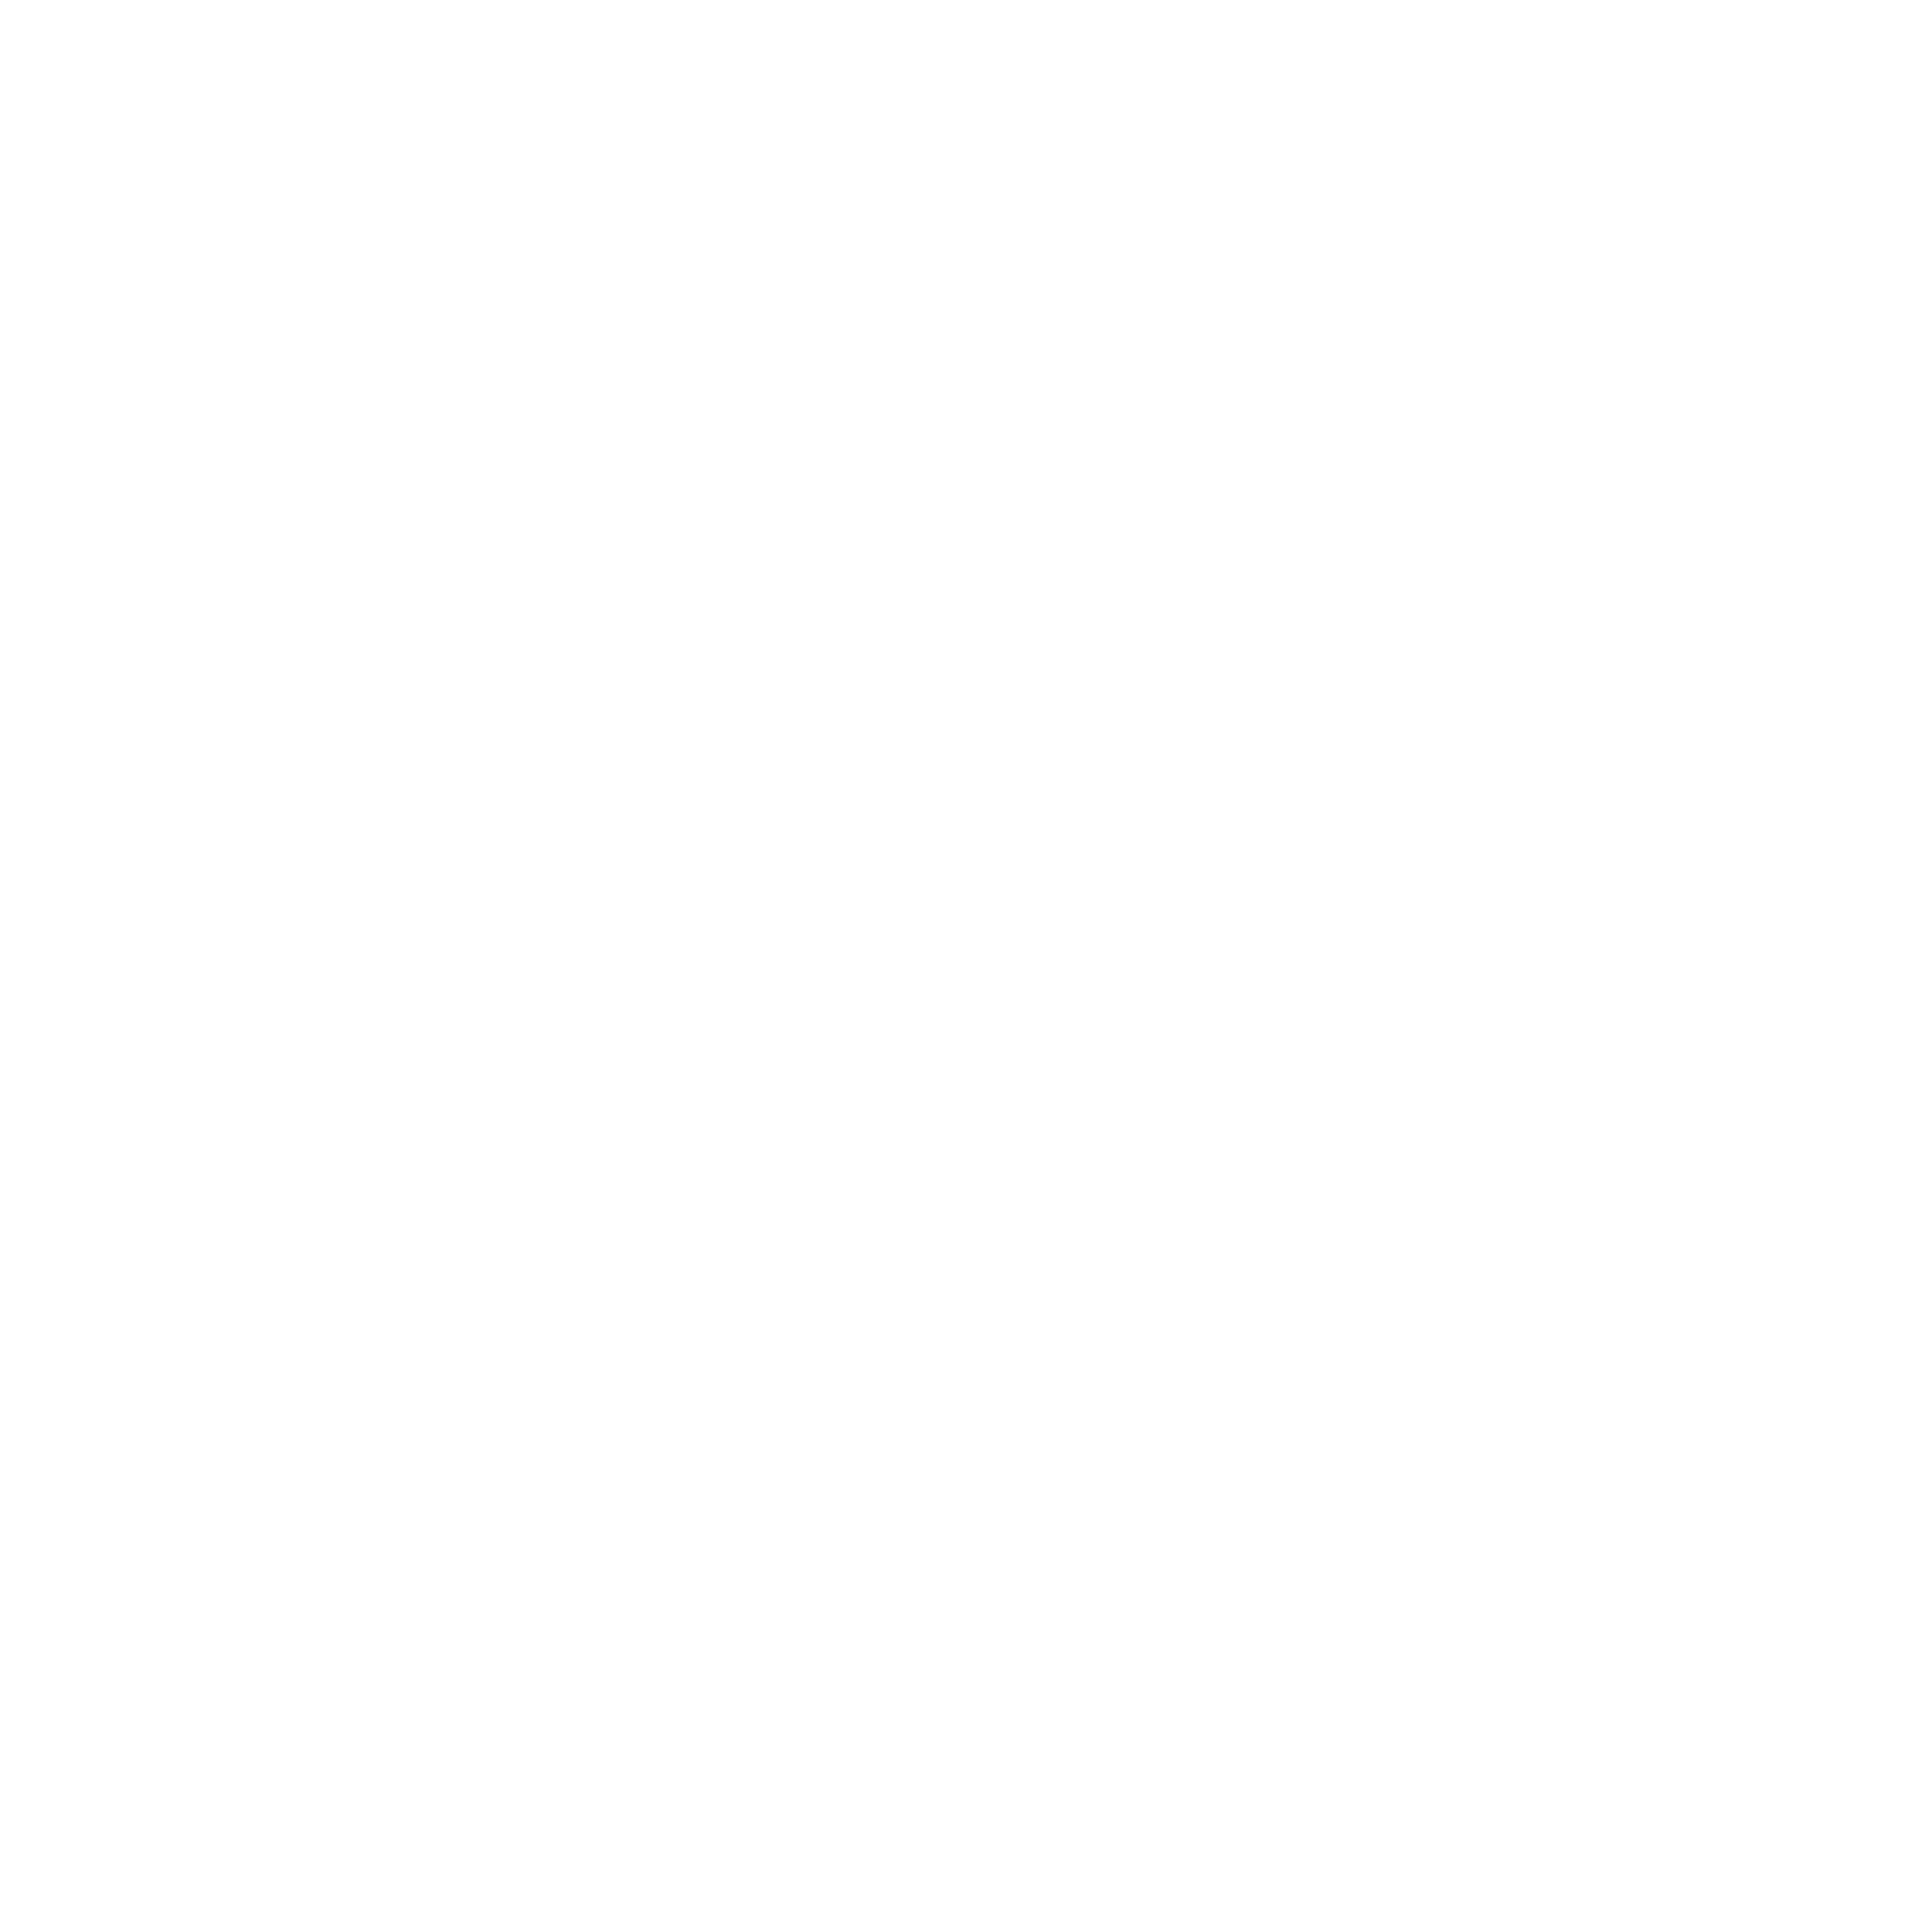 The Shelter Abidjan